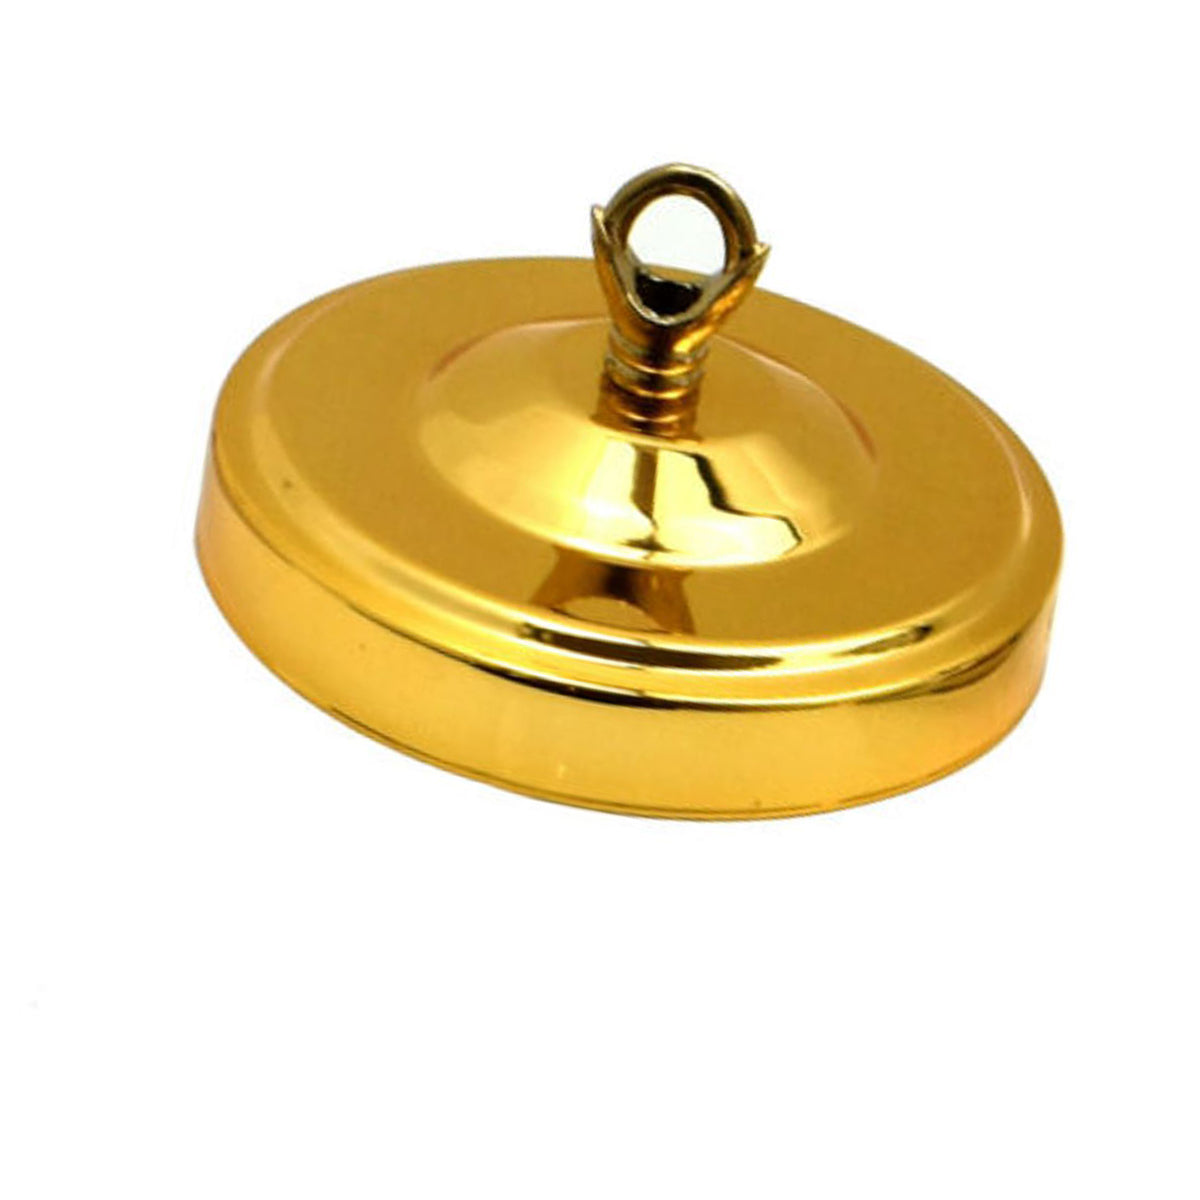 Ceiling Rose Hook Plate Gold Color 108mm Diameter Light Fitting